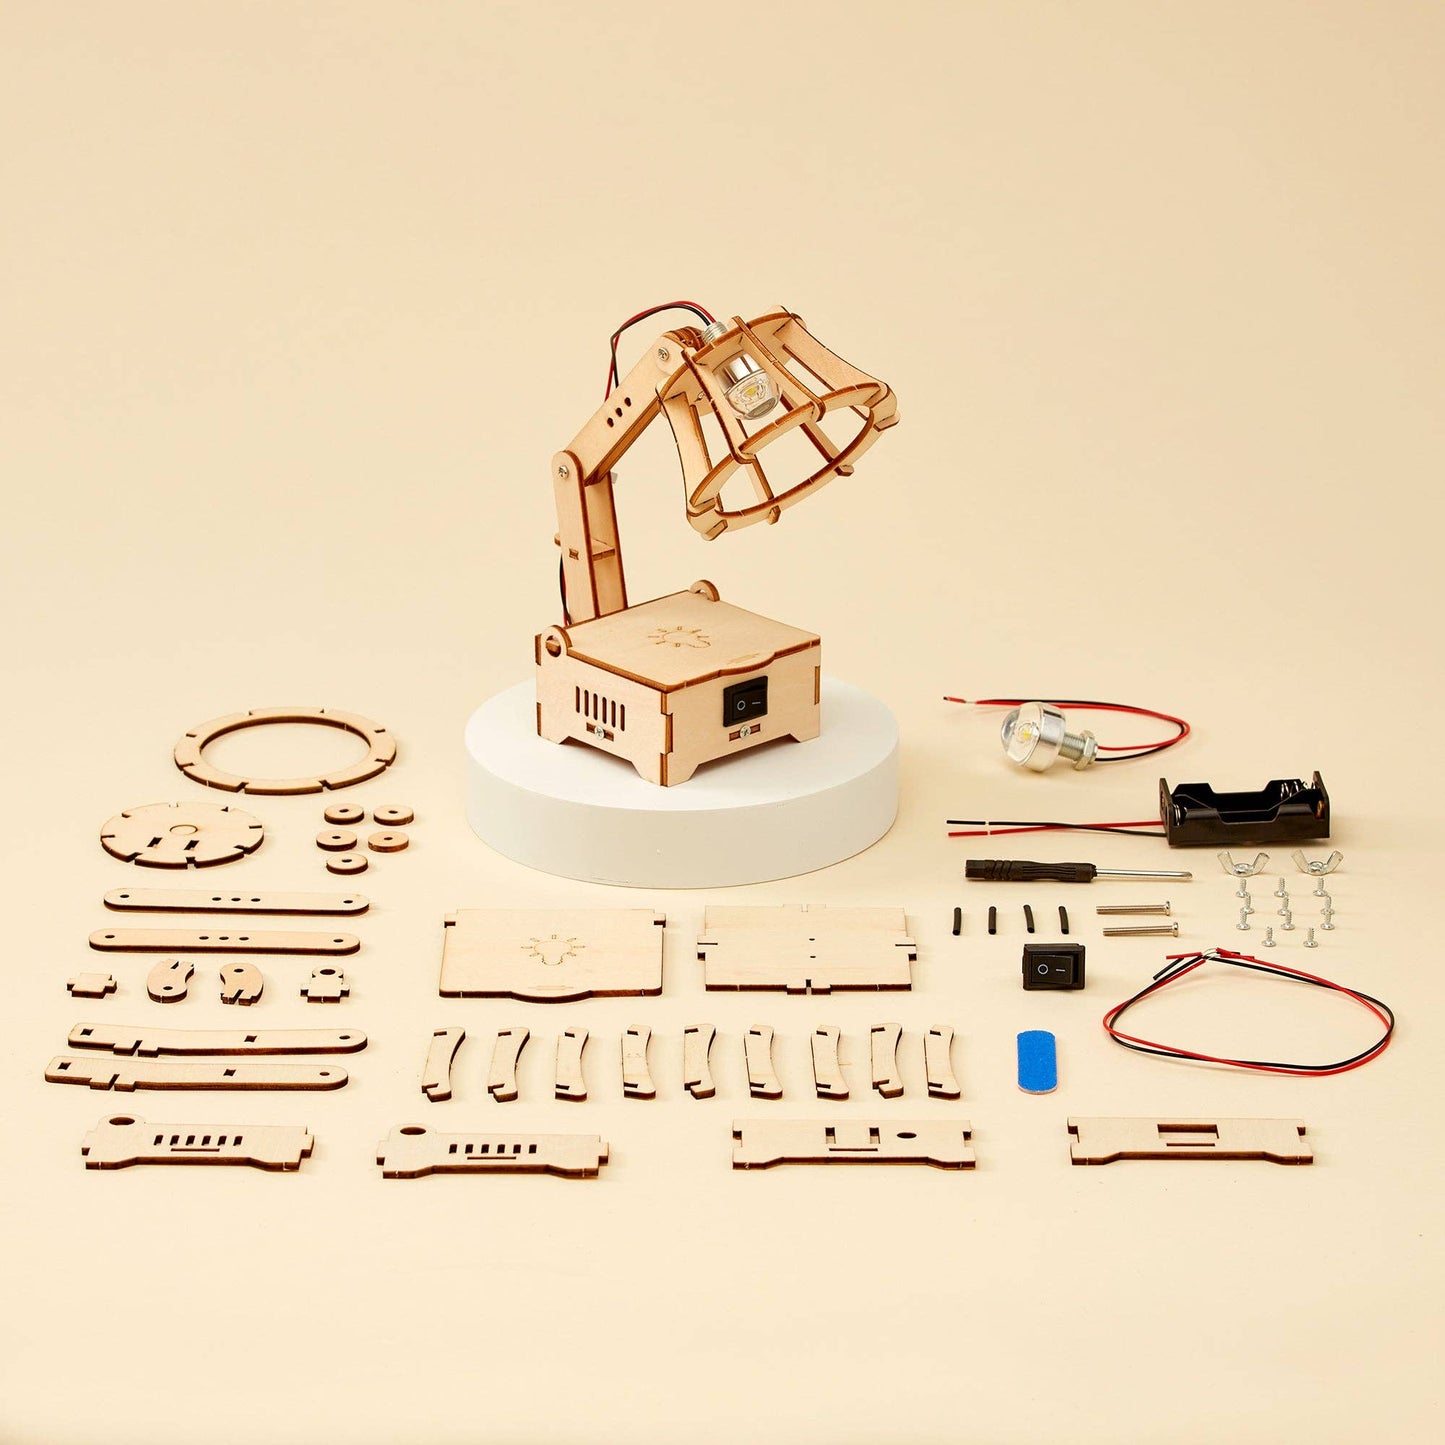 CreateKit - Electric Lamp, Educational STEM Toy for Kids